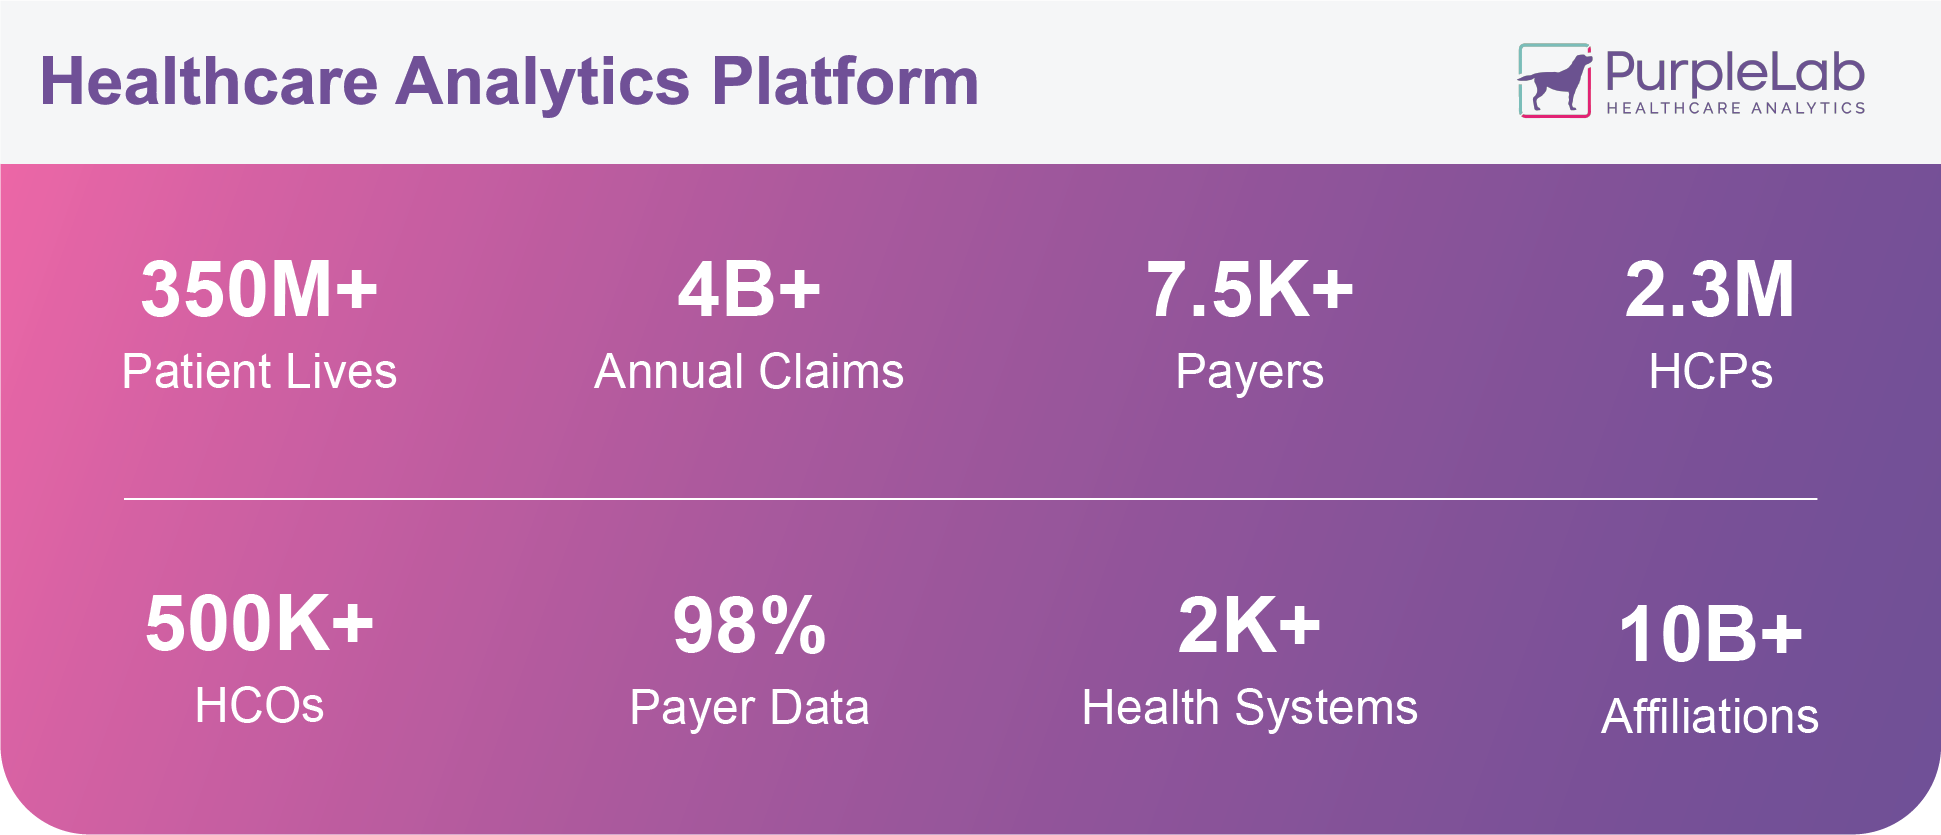 1b Healthcare Analytics Platform